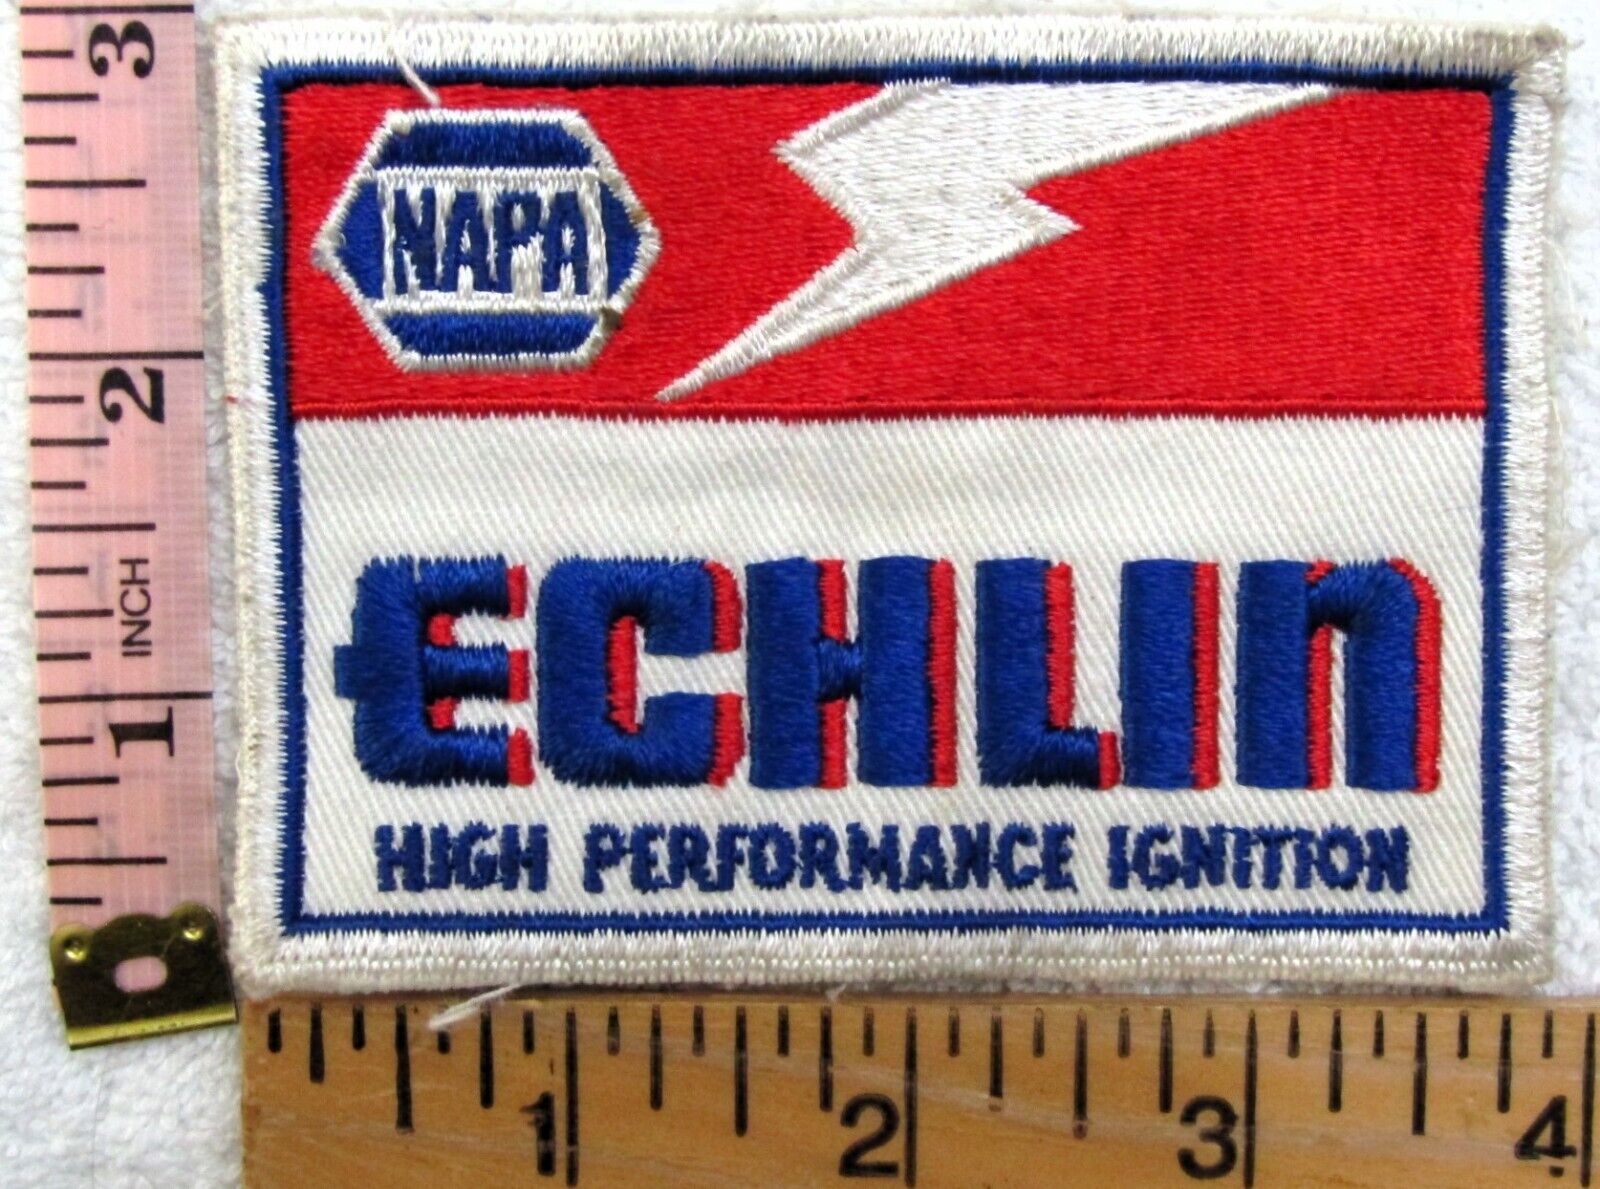 Vintage NAPA Echlin High Performance Ignition Patch